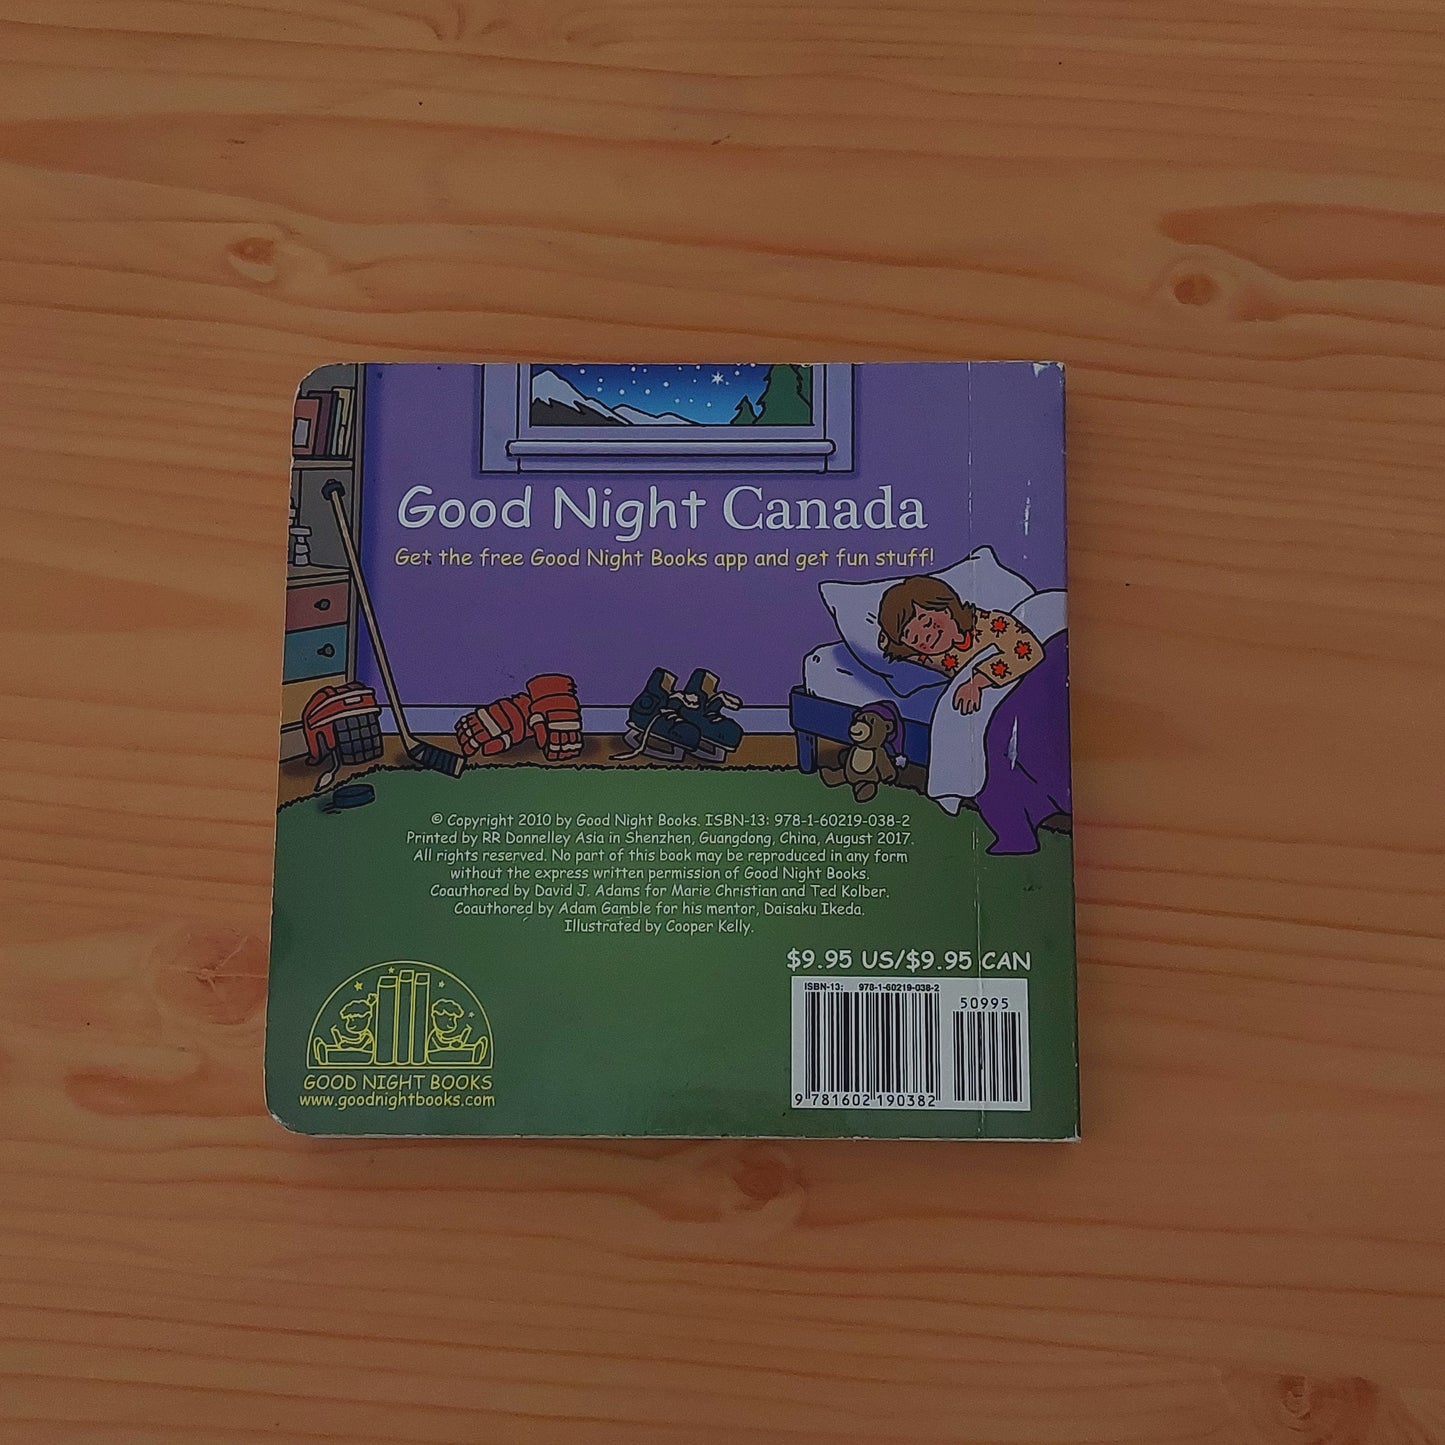 Good Night Canada